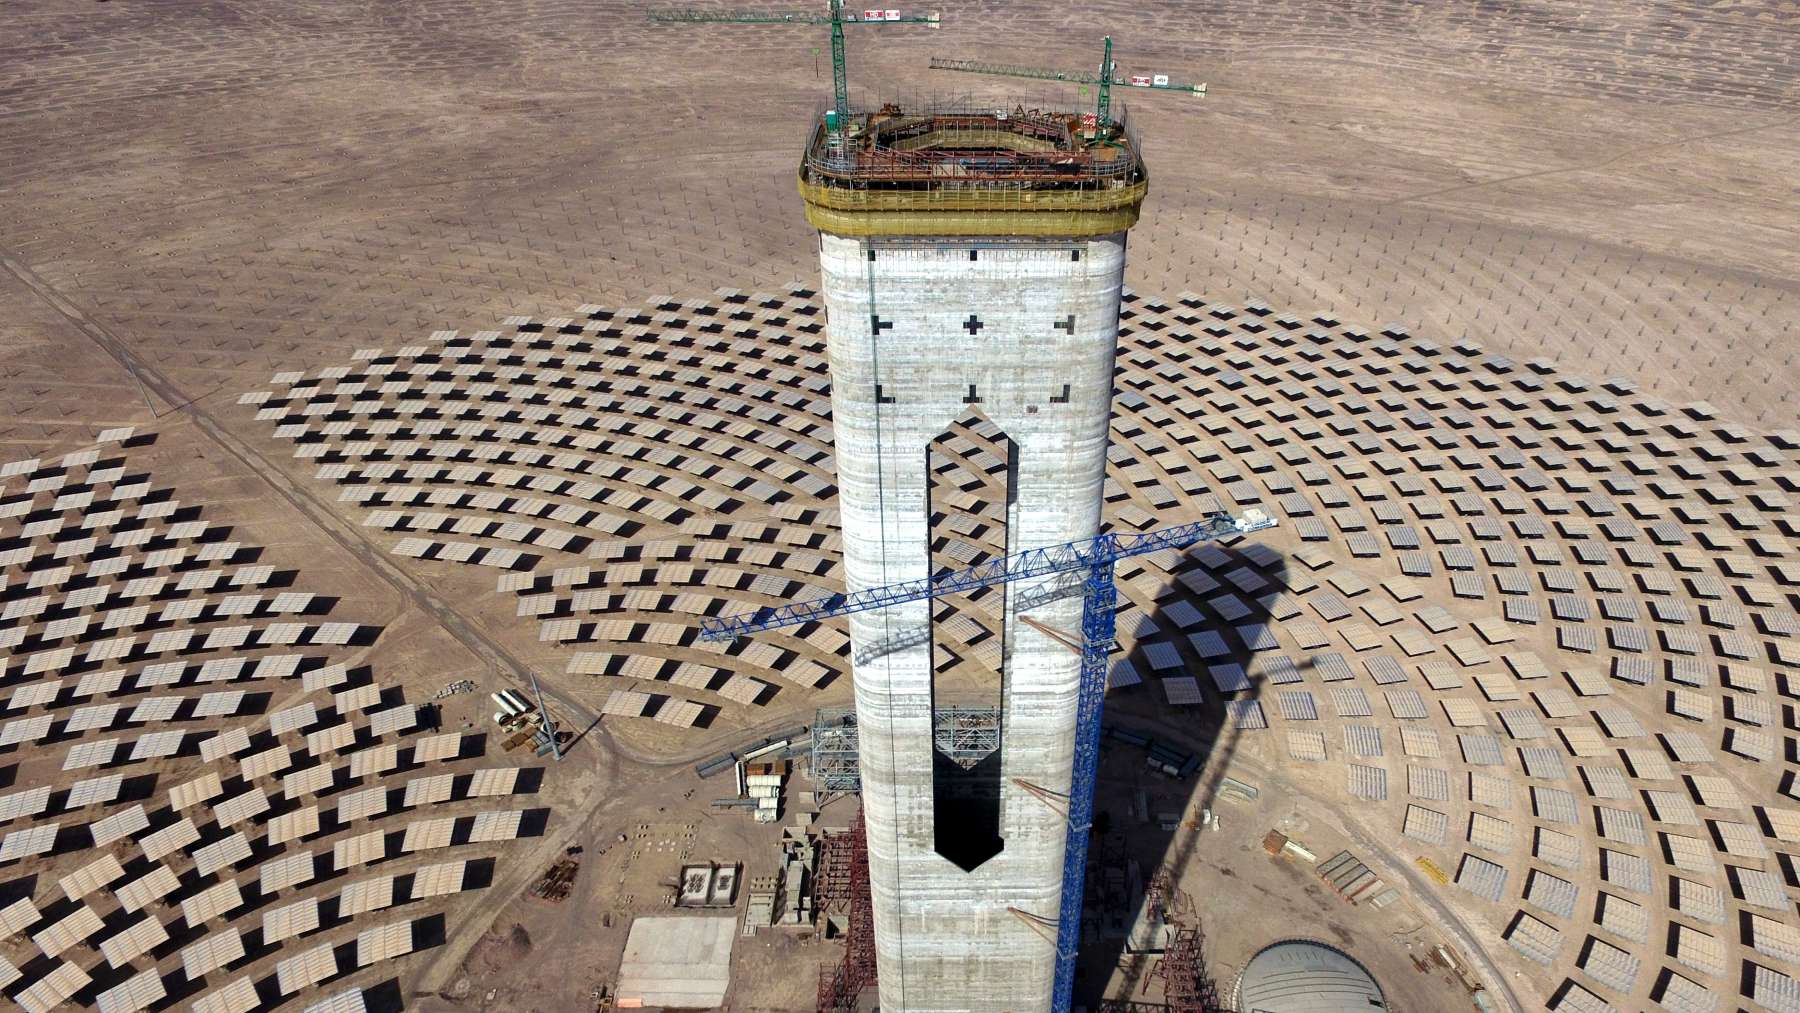 Planta solar de Atacama (Chile) desarrollada por Abengoa.